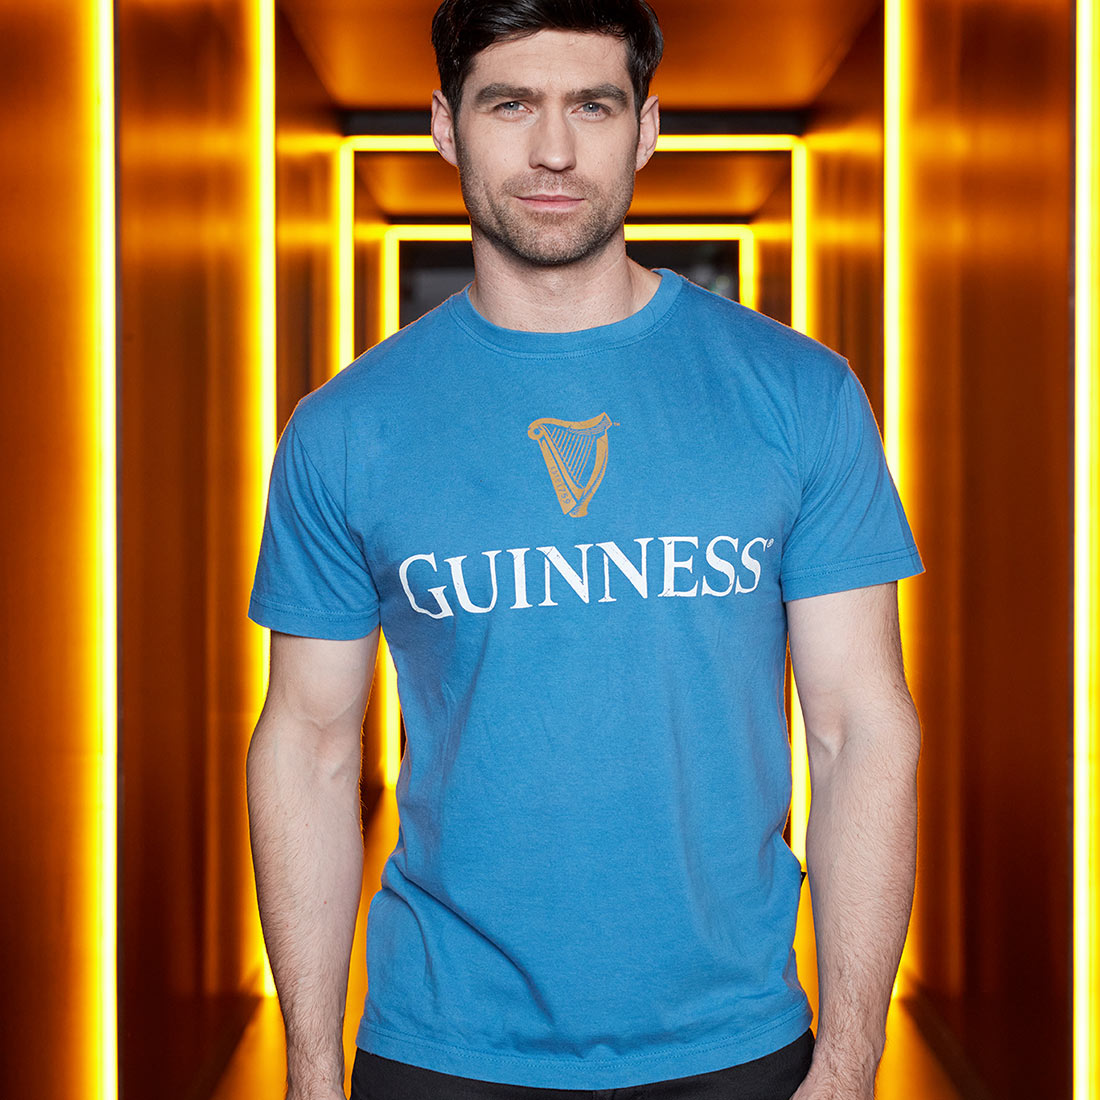 Guinness Trademark Label Blue T-Shirt featuring the Guinness brand.